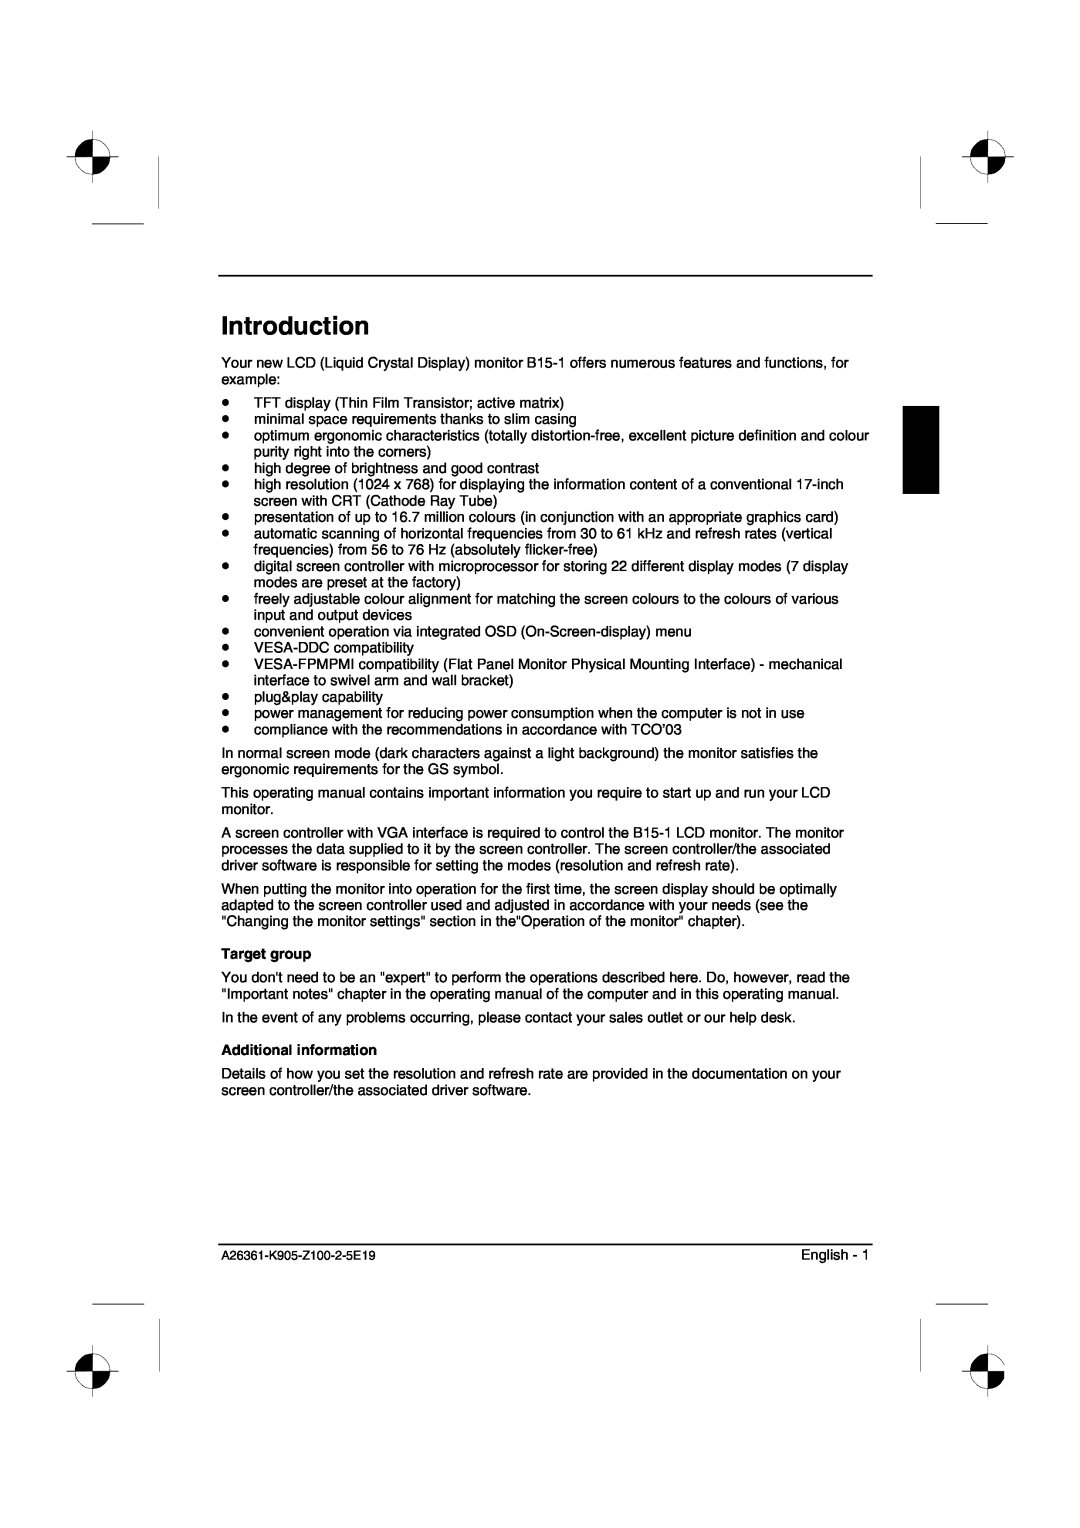 Fujitsu Siemens Computers B15-1 manual Introduction, Target group, Additional information 